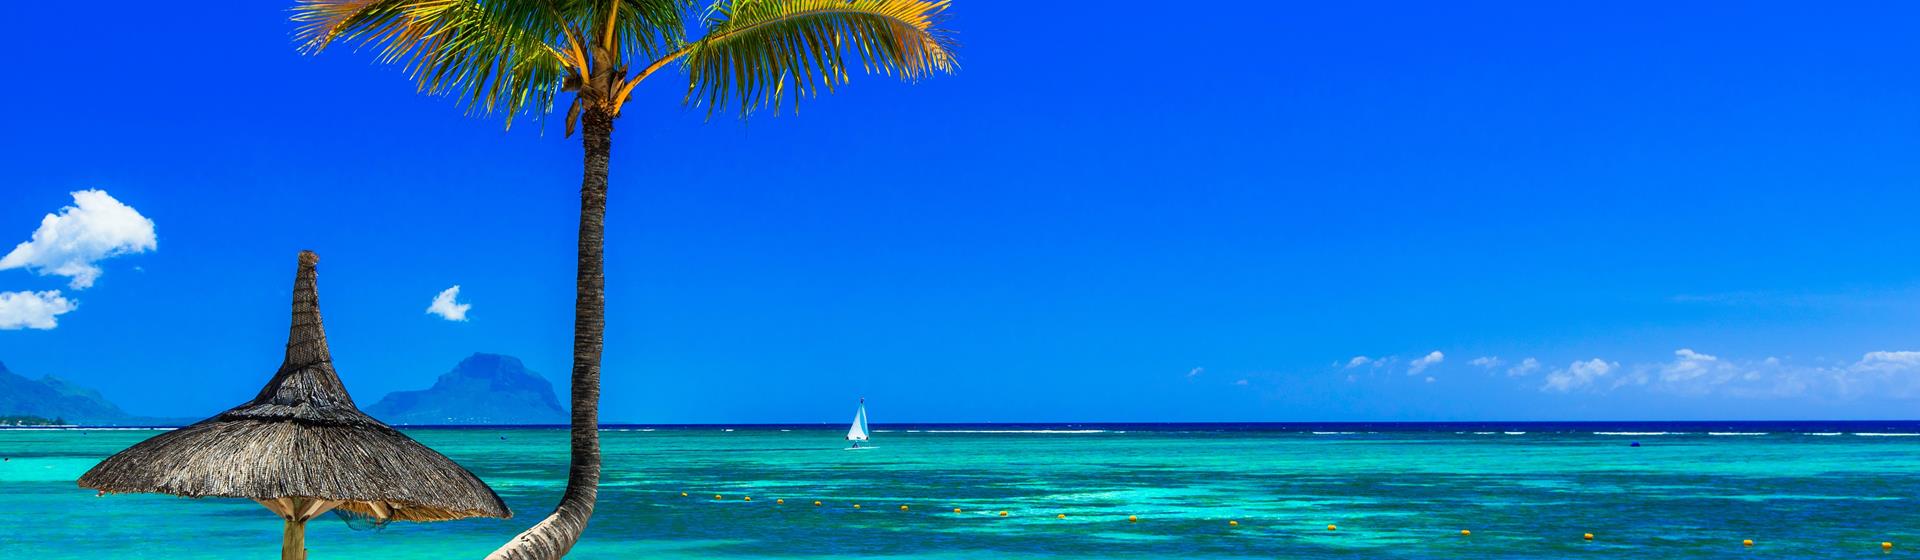 Holidays to Mauritius